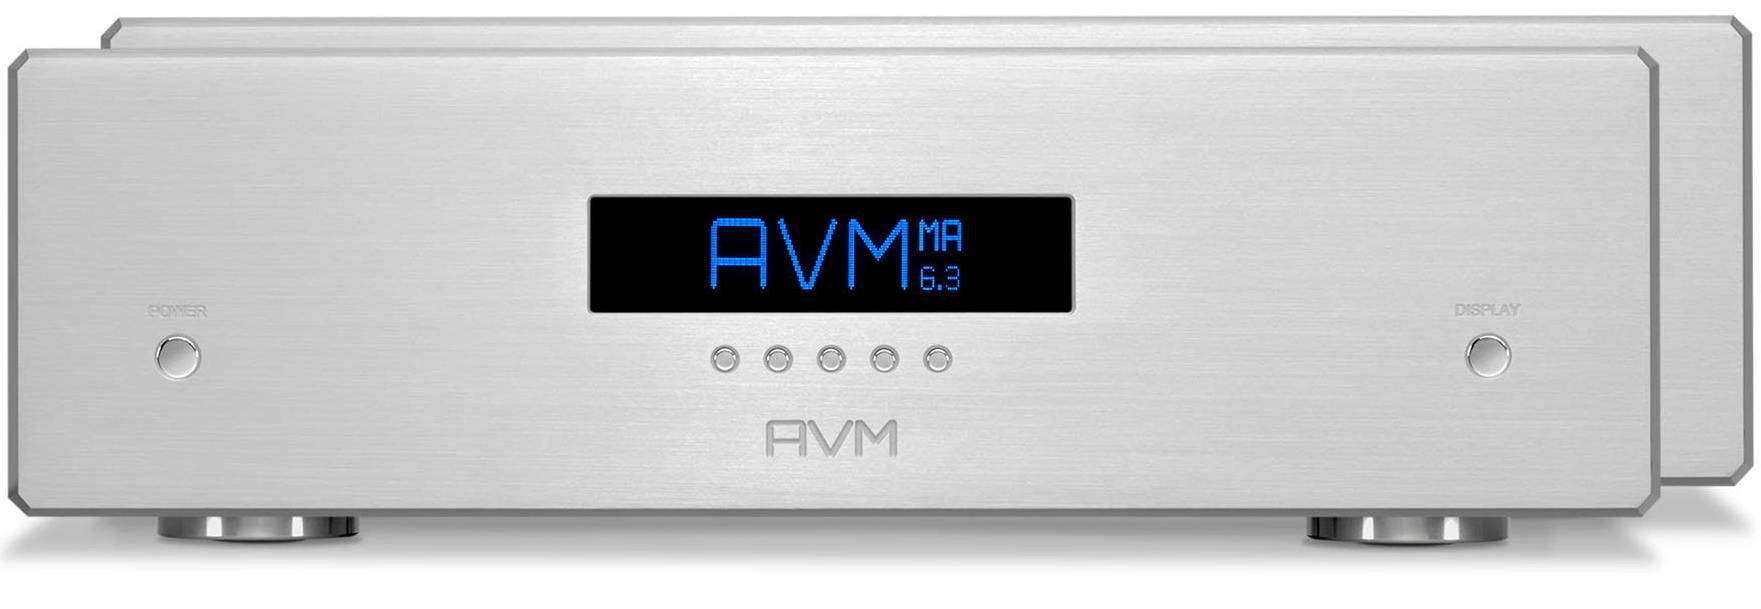 Усилитель мощности AVM MA 6.3 Silver